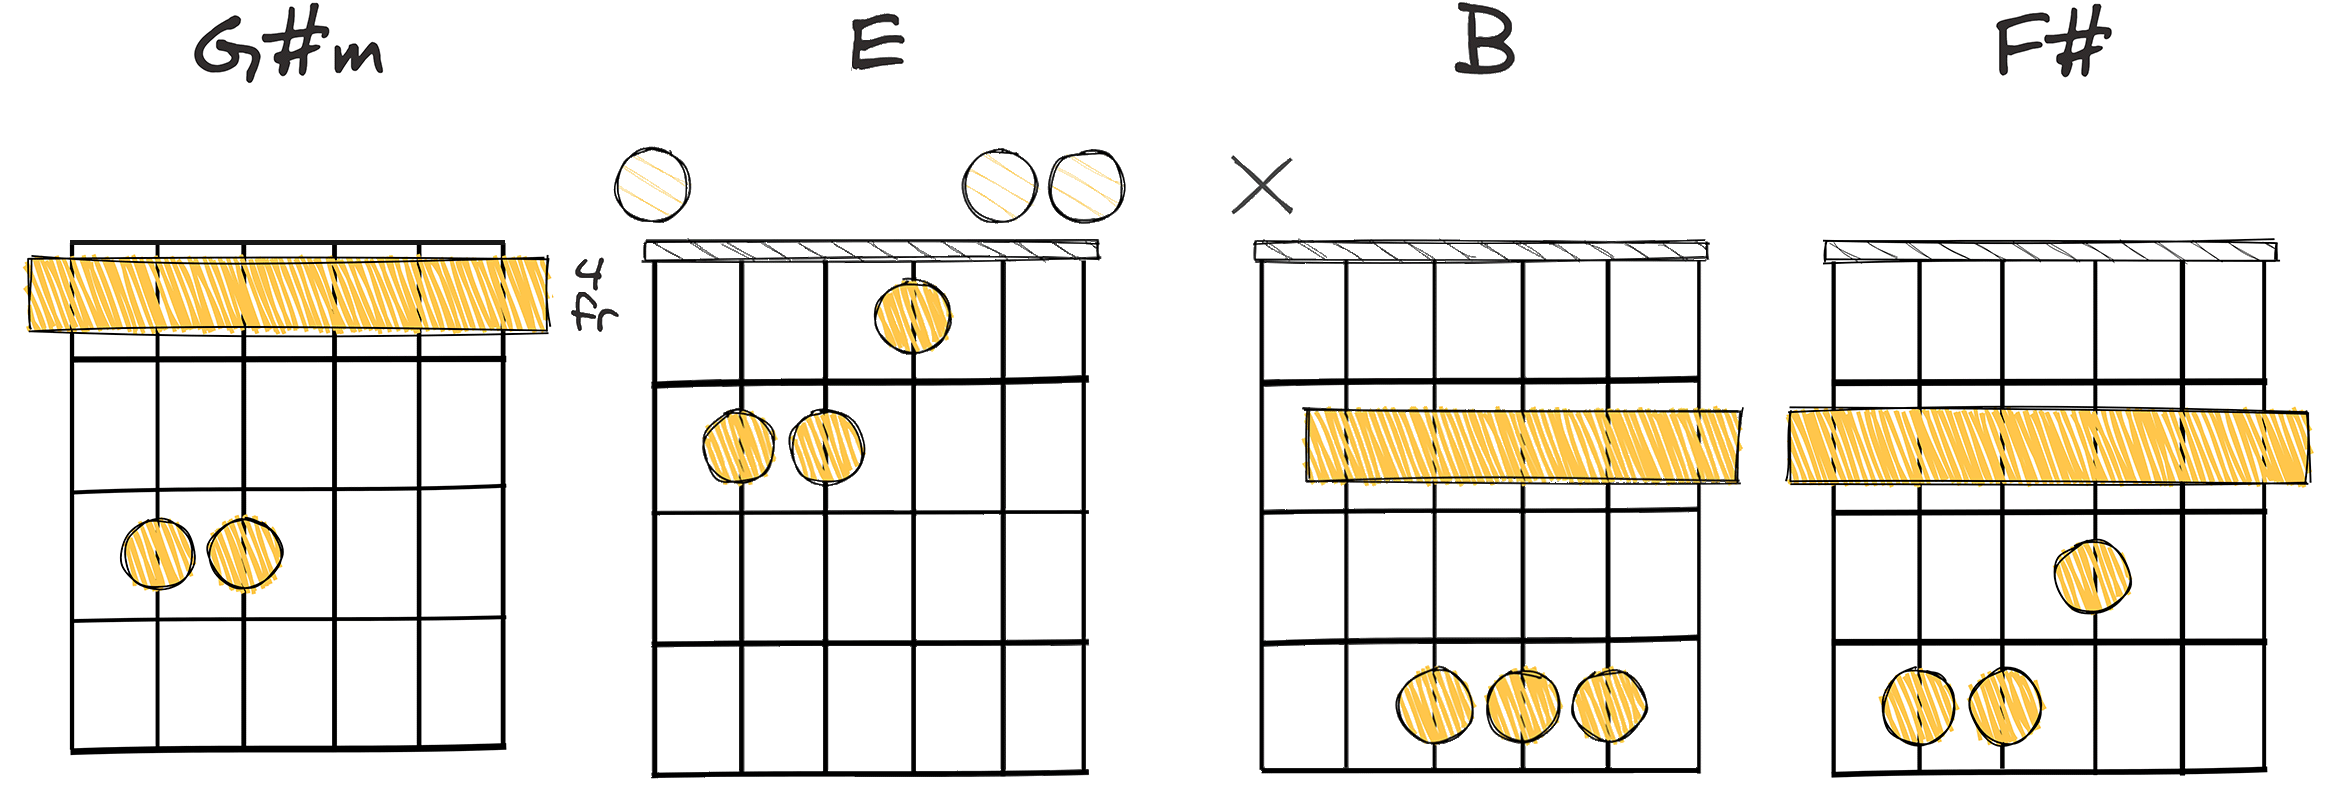 vi - IV - I - V (6-4-1-5) chords diagram